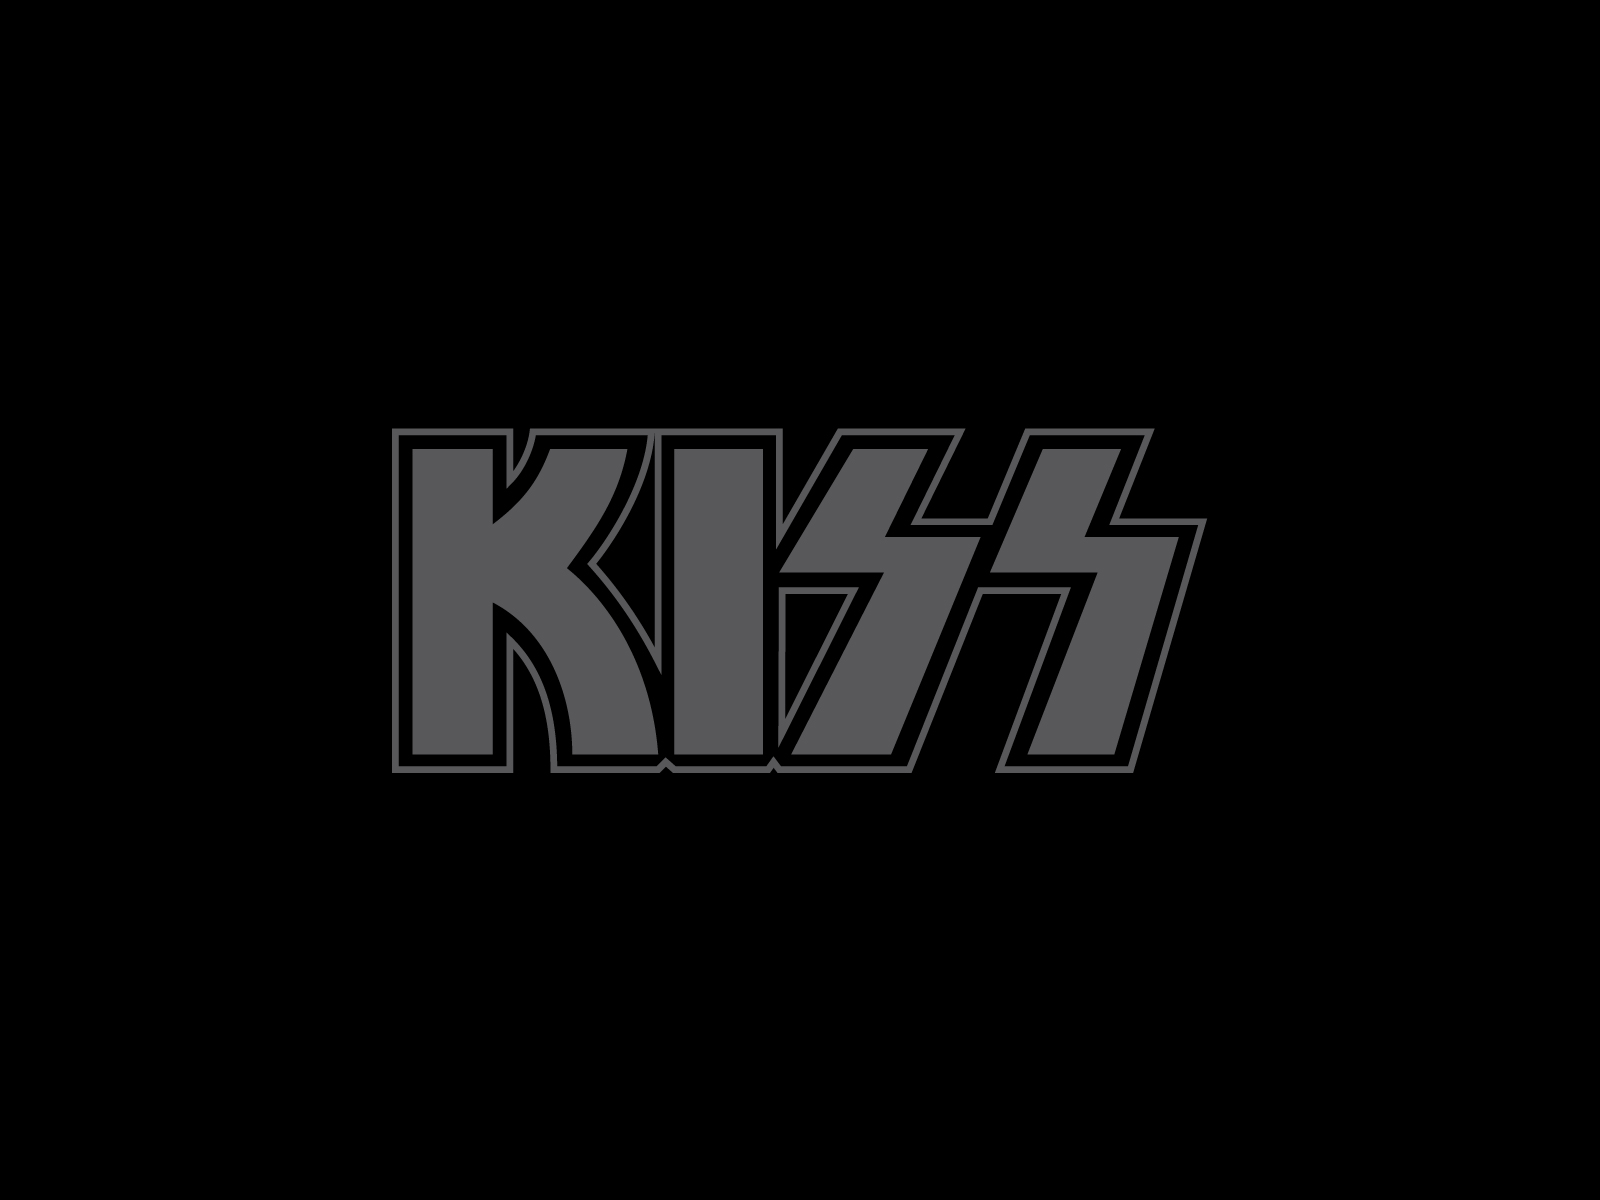 Kiss heavy metal rock bands logo wallpaper background